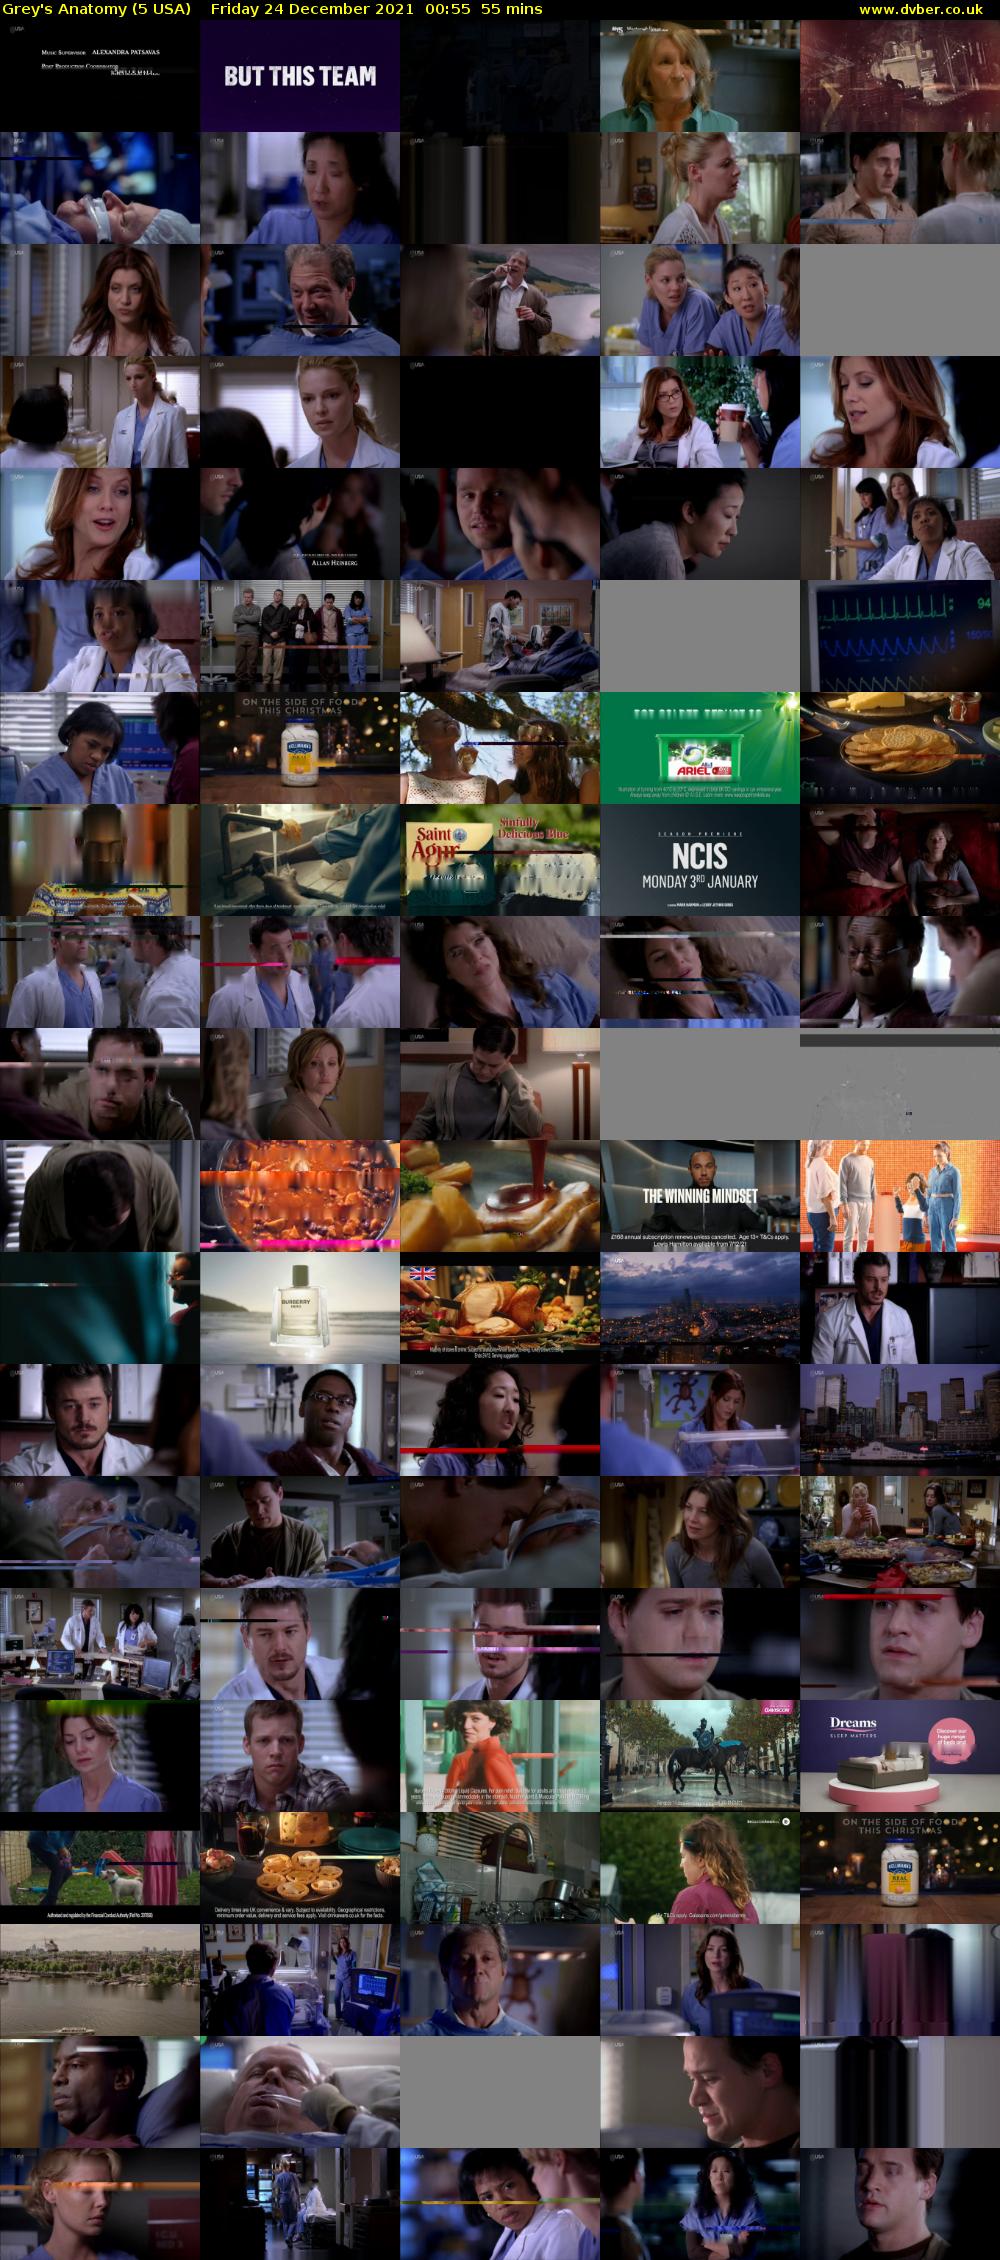 Grey's Anatomy (5 USA) Friday 24 December 2021 00:55 - 01:50